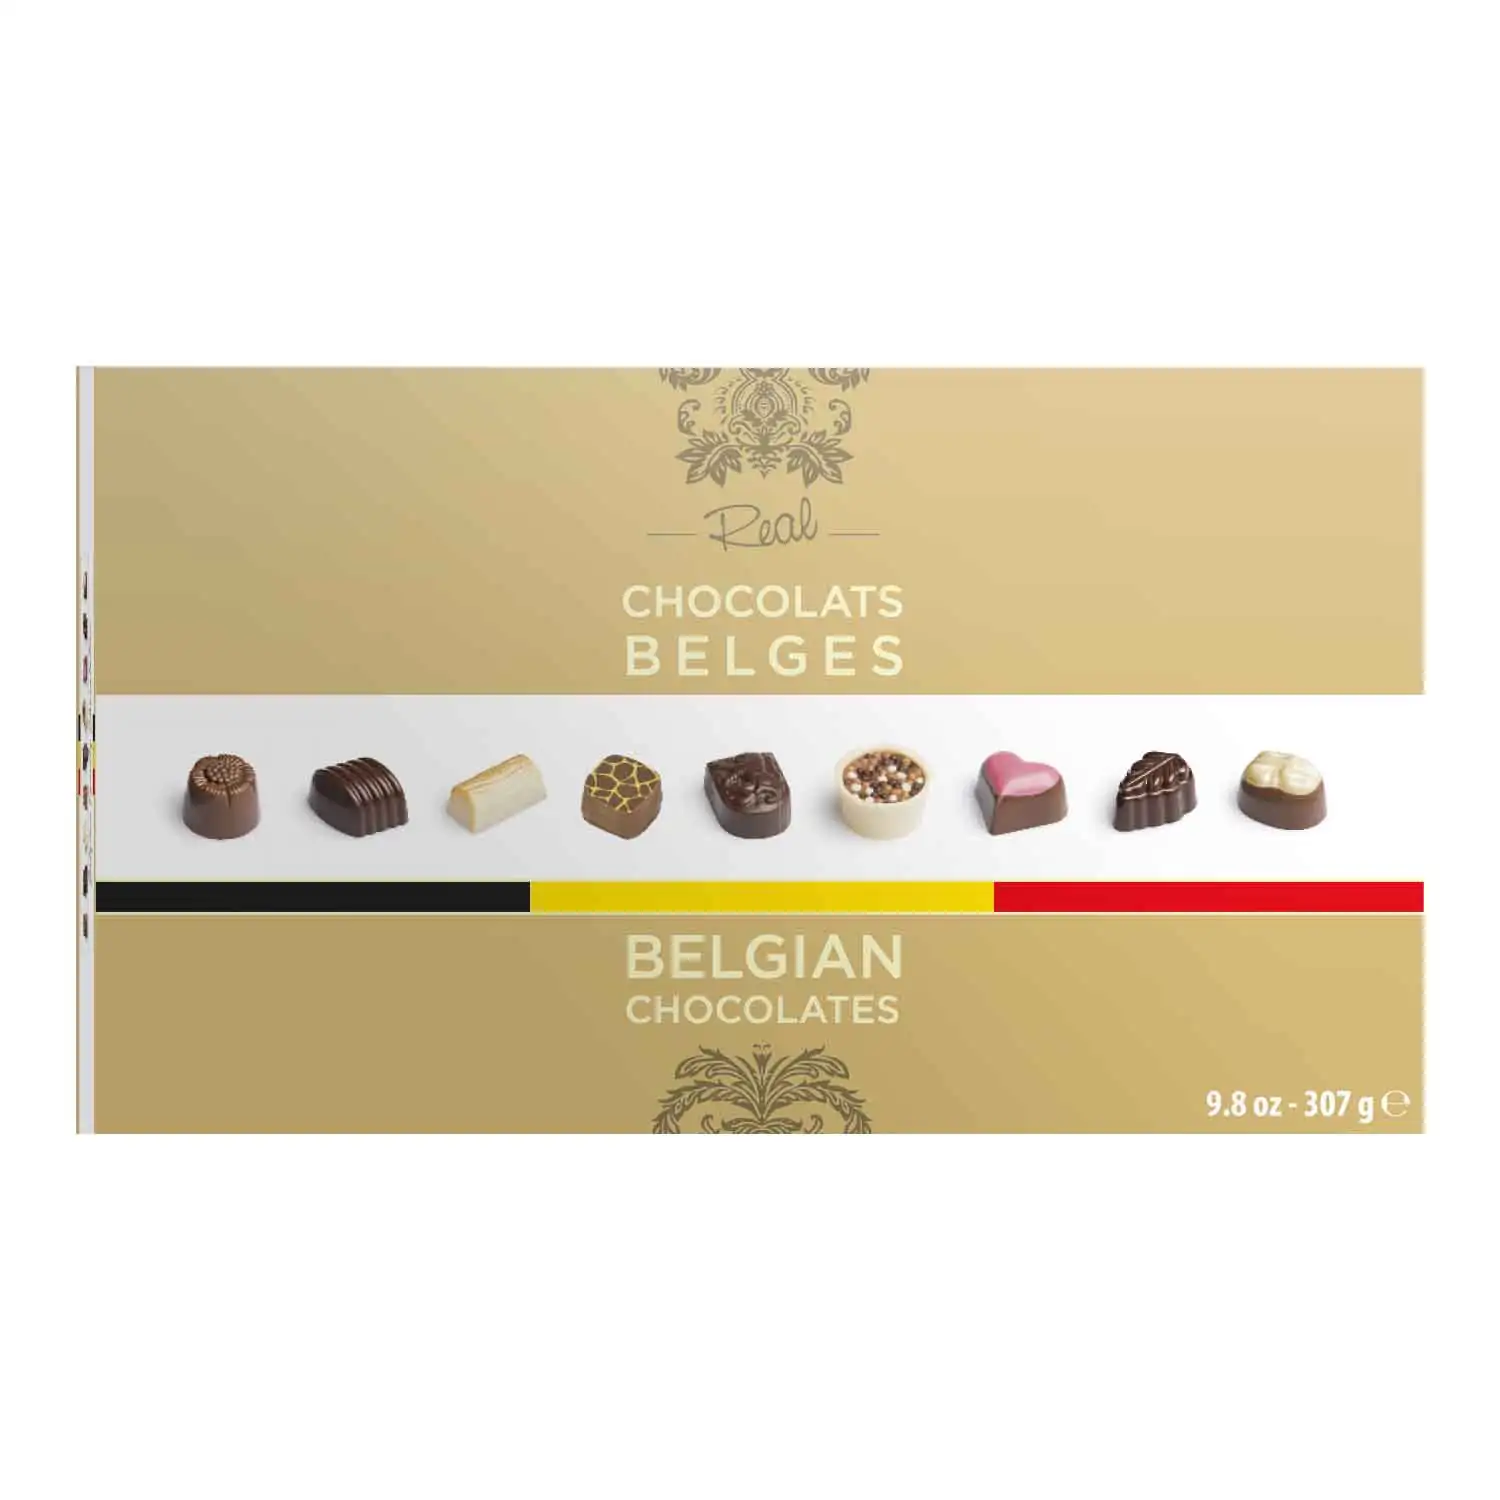 Real belgian chocolates 307g